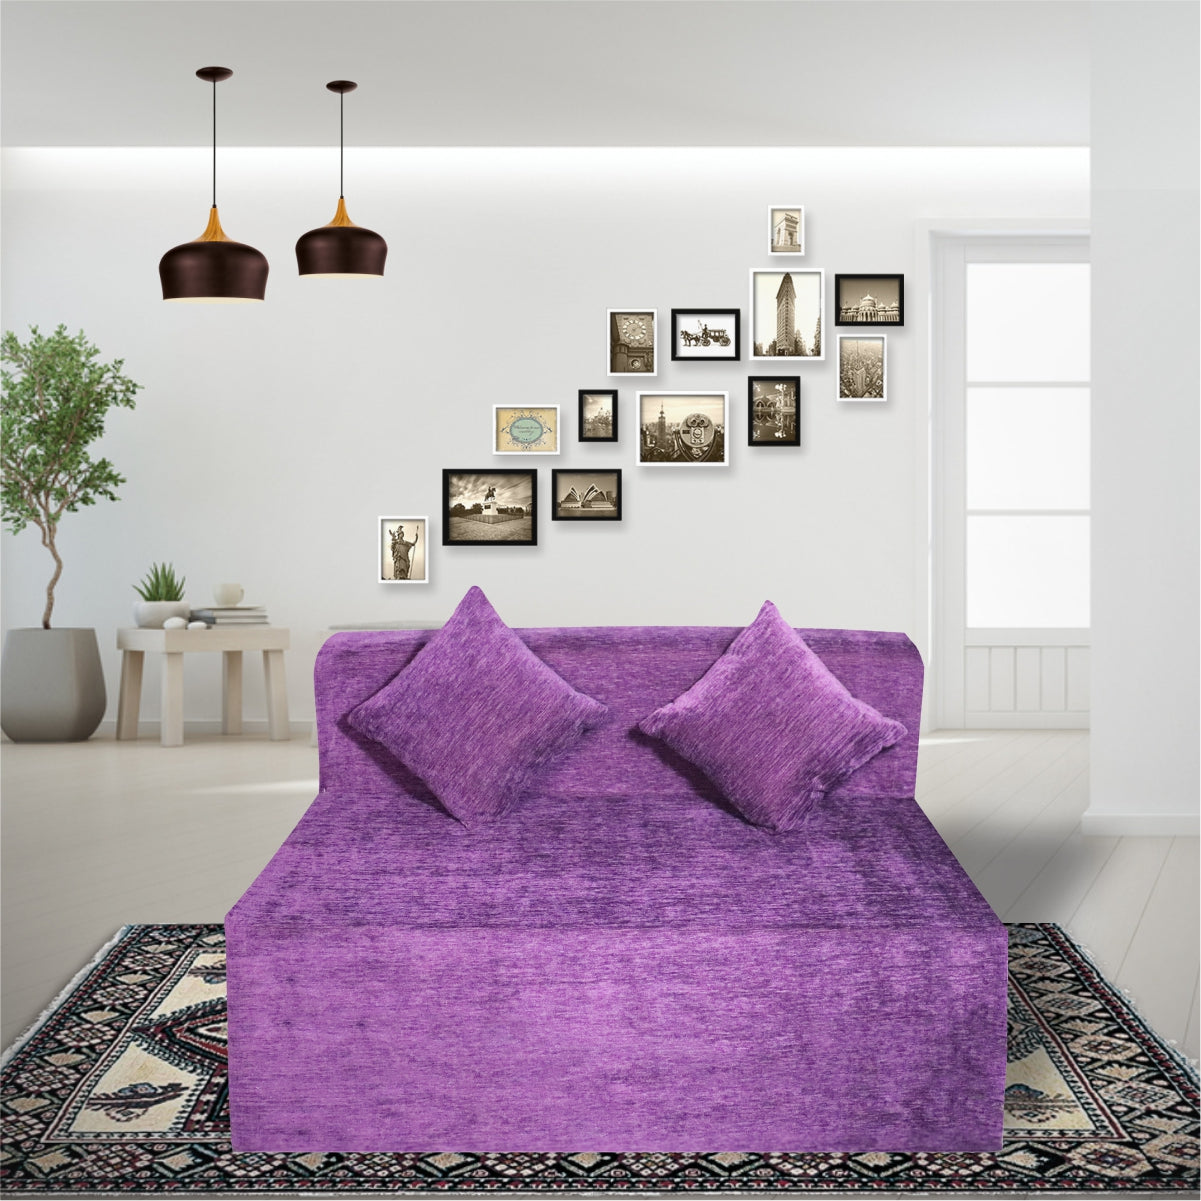 Cover of Purple Molfino Fabric 6'X4' Rejoice Sofa cum Bed